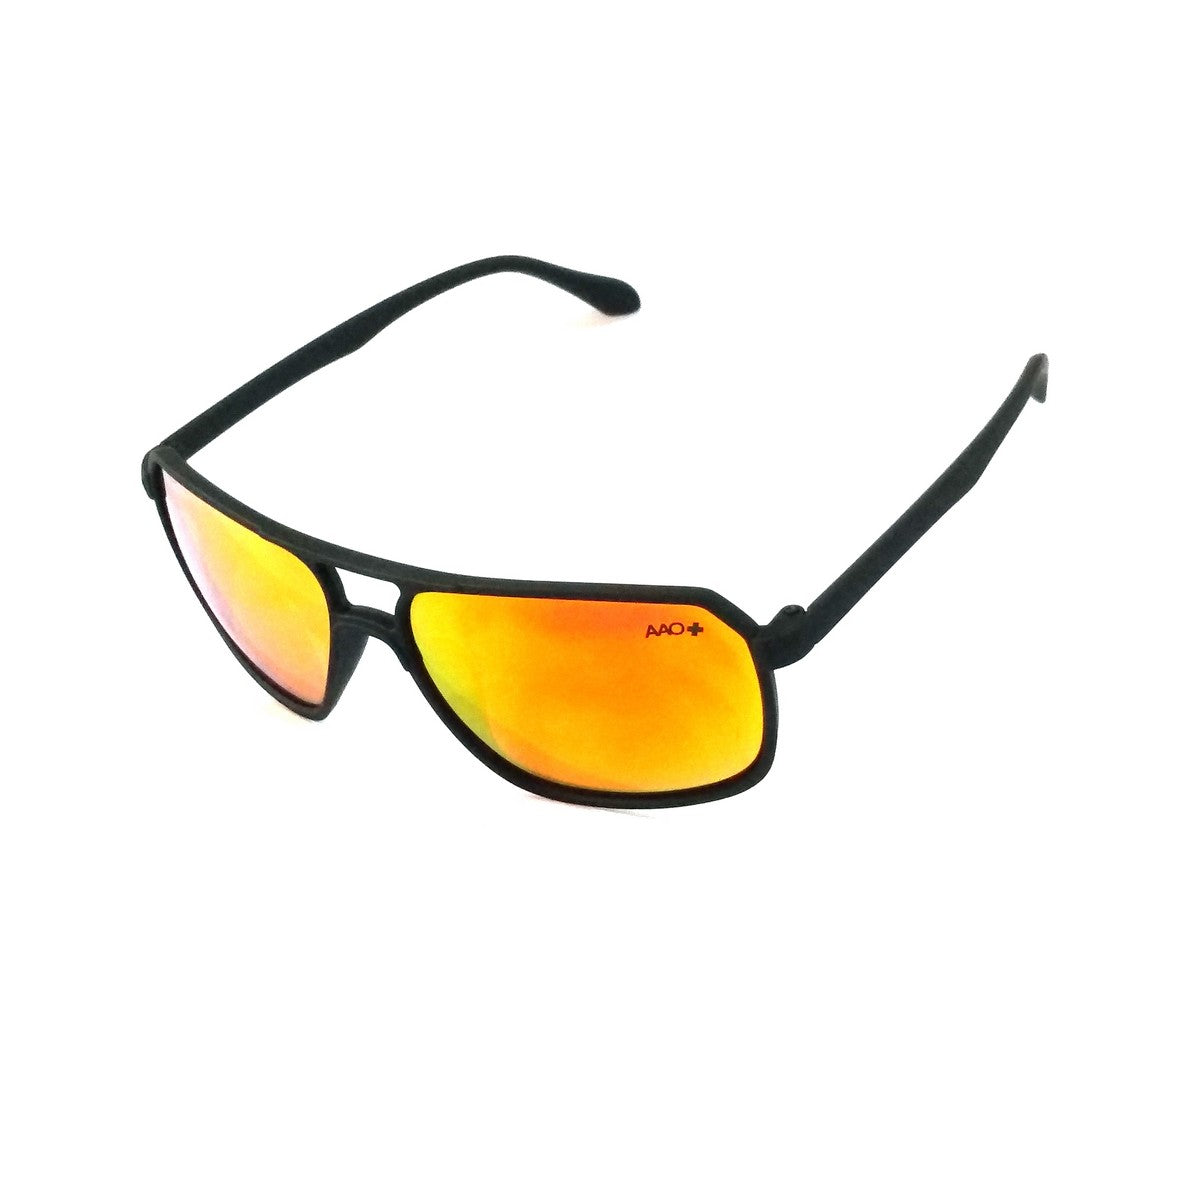 Orange Mirror Rectangle Sunglasses for Men Women 545